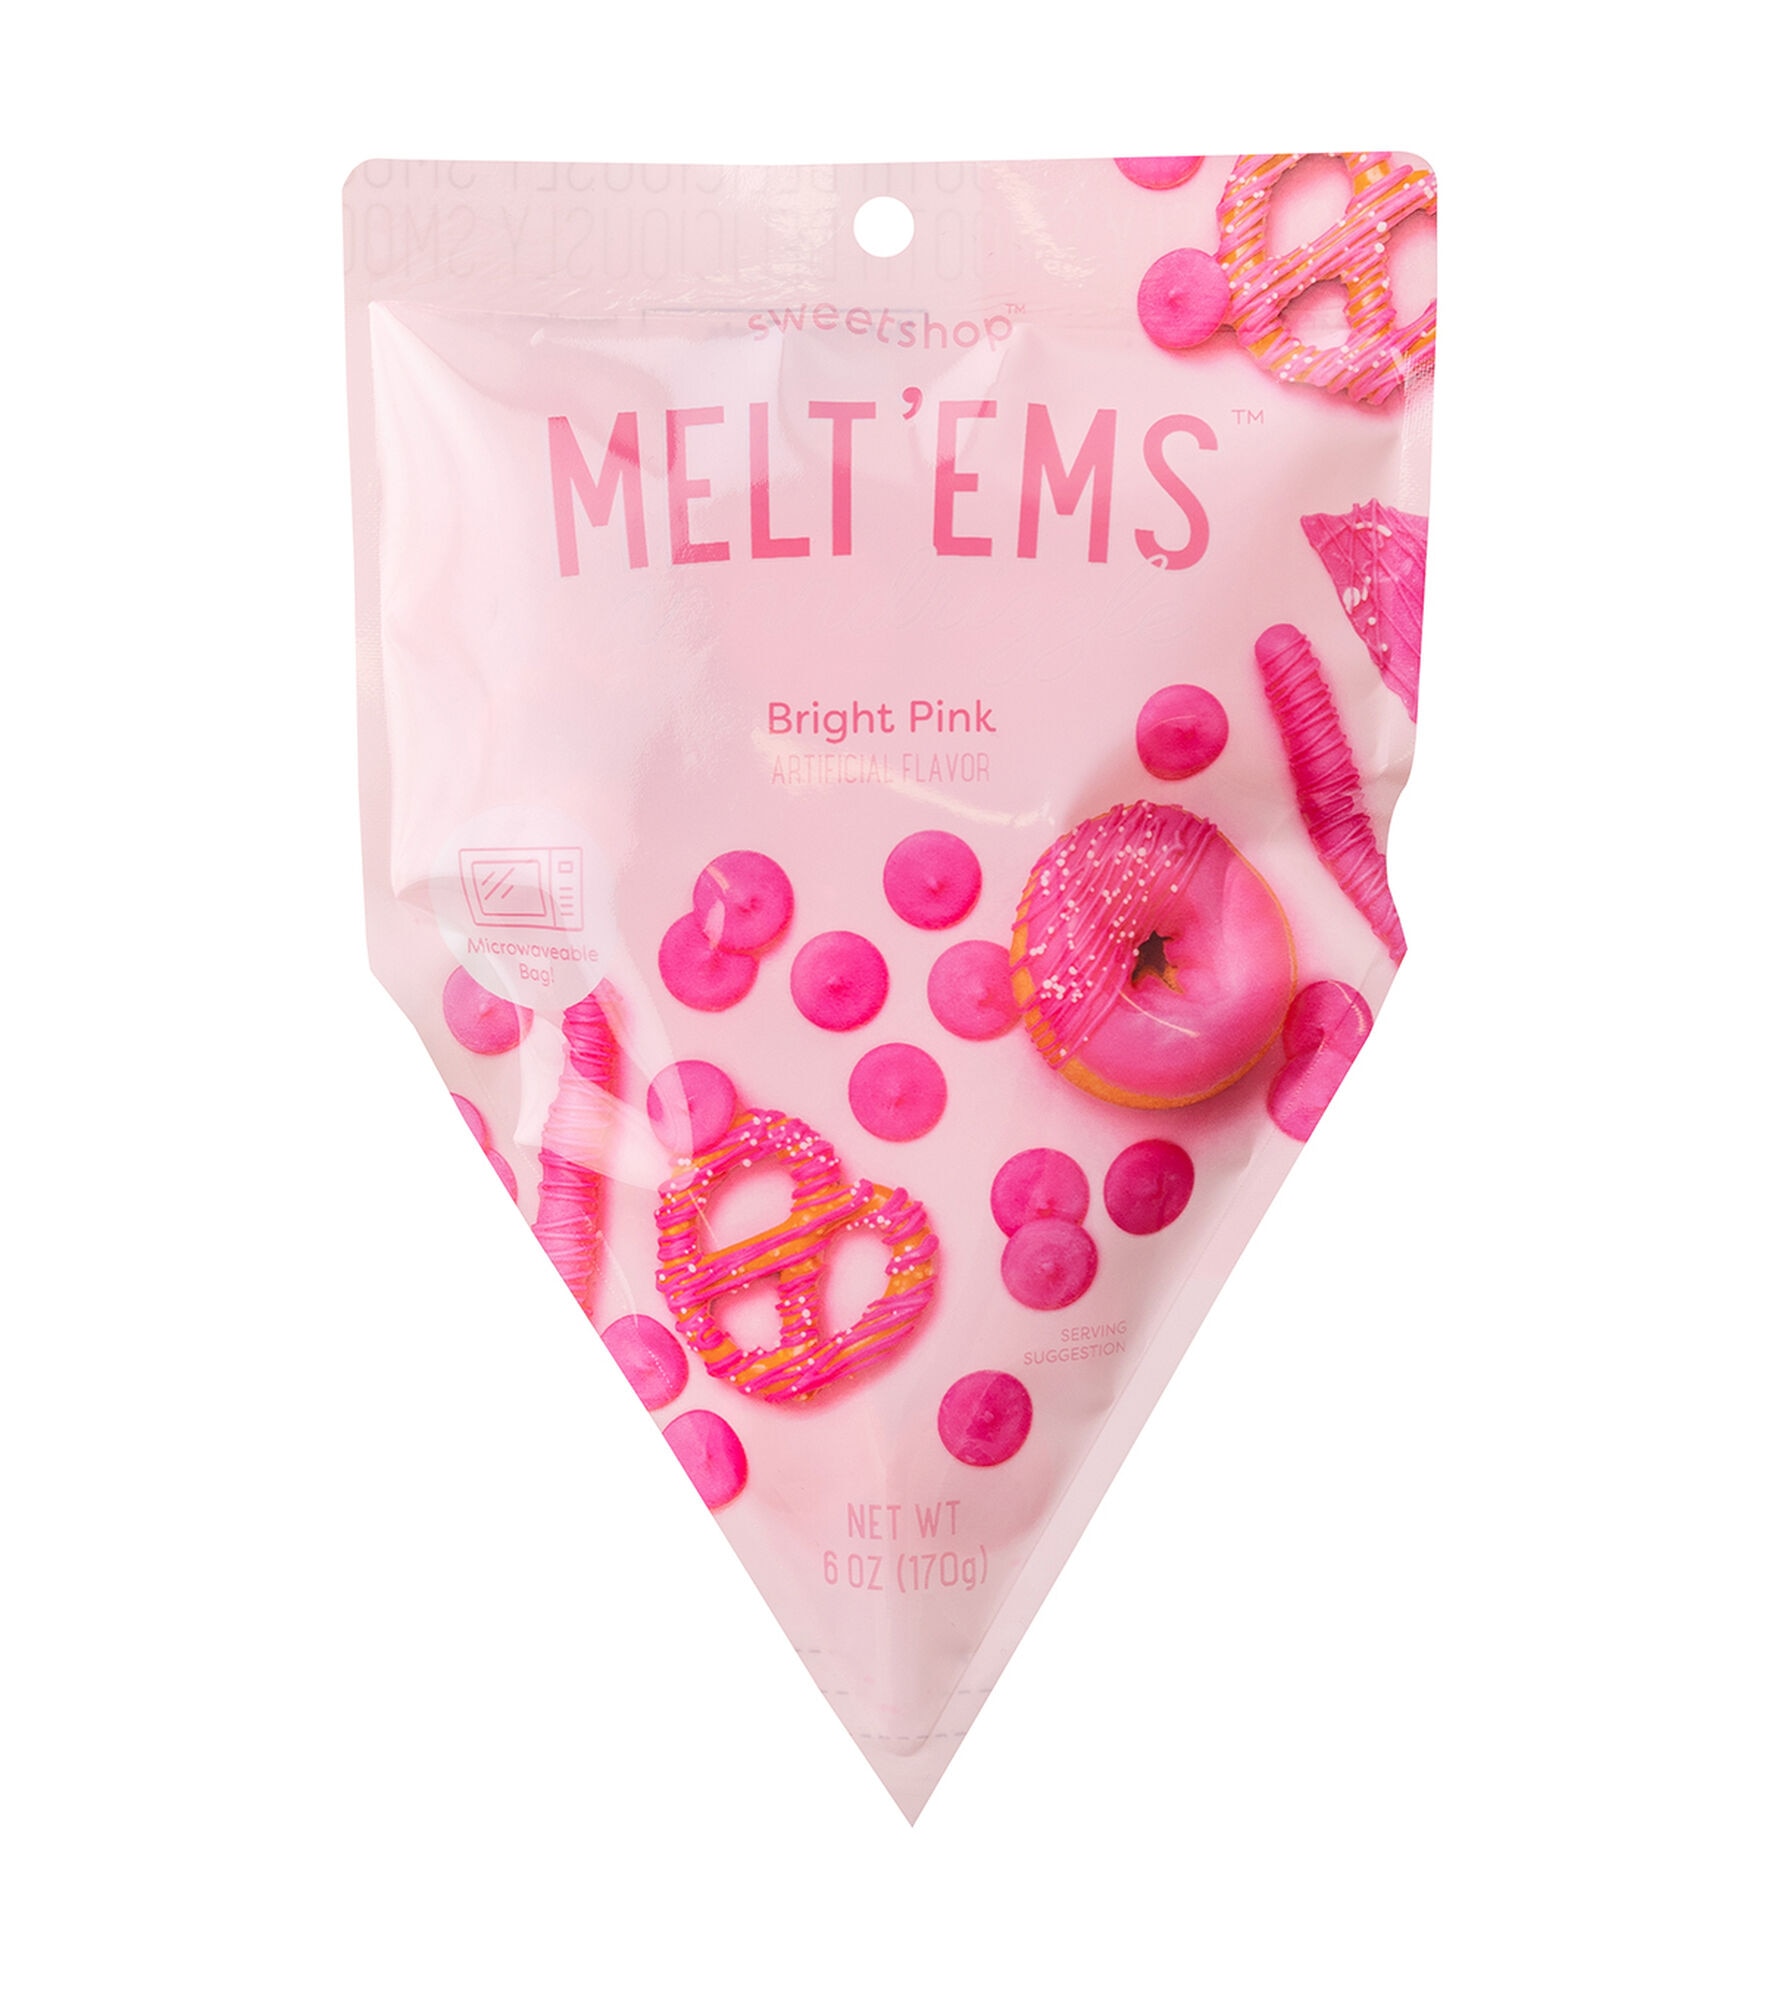 Sweetshop 6oz Melt'ems Chocolate, Bright Pink, hi-res